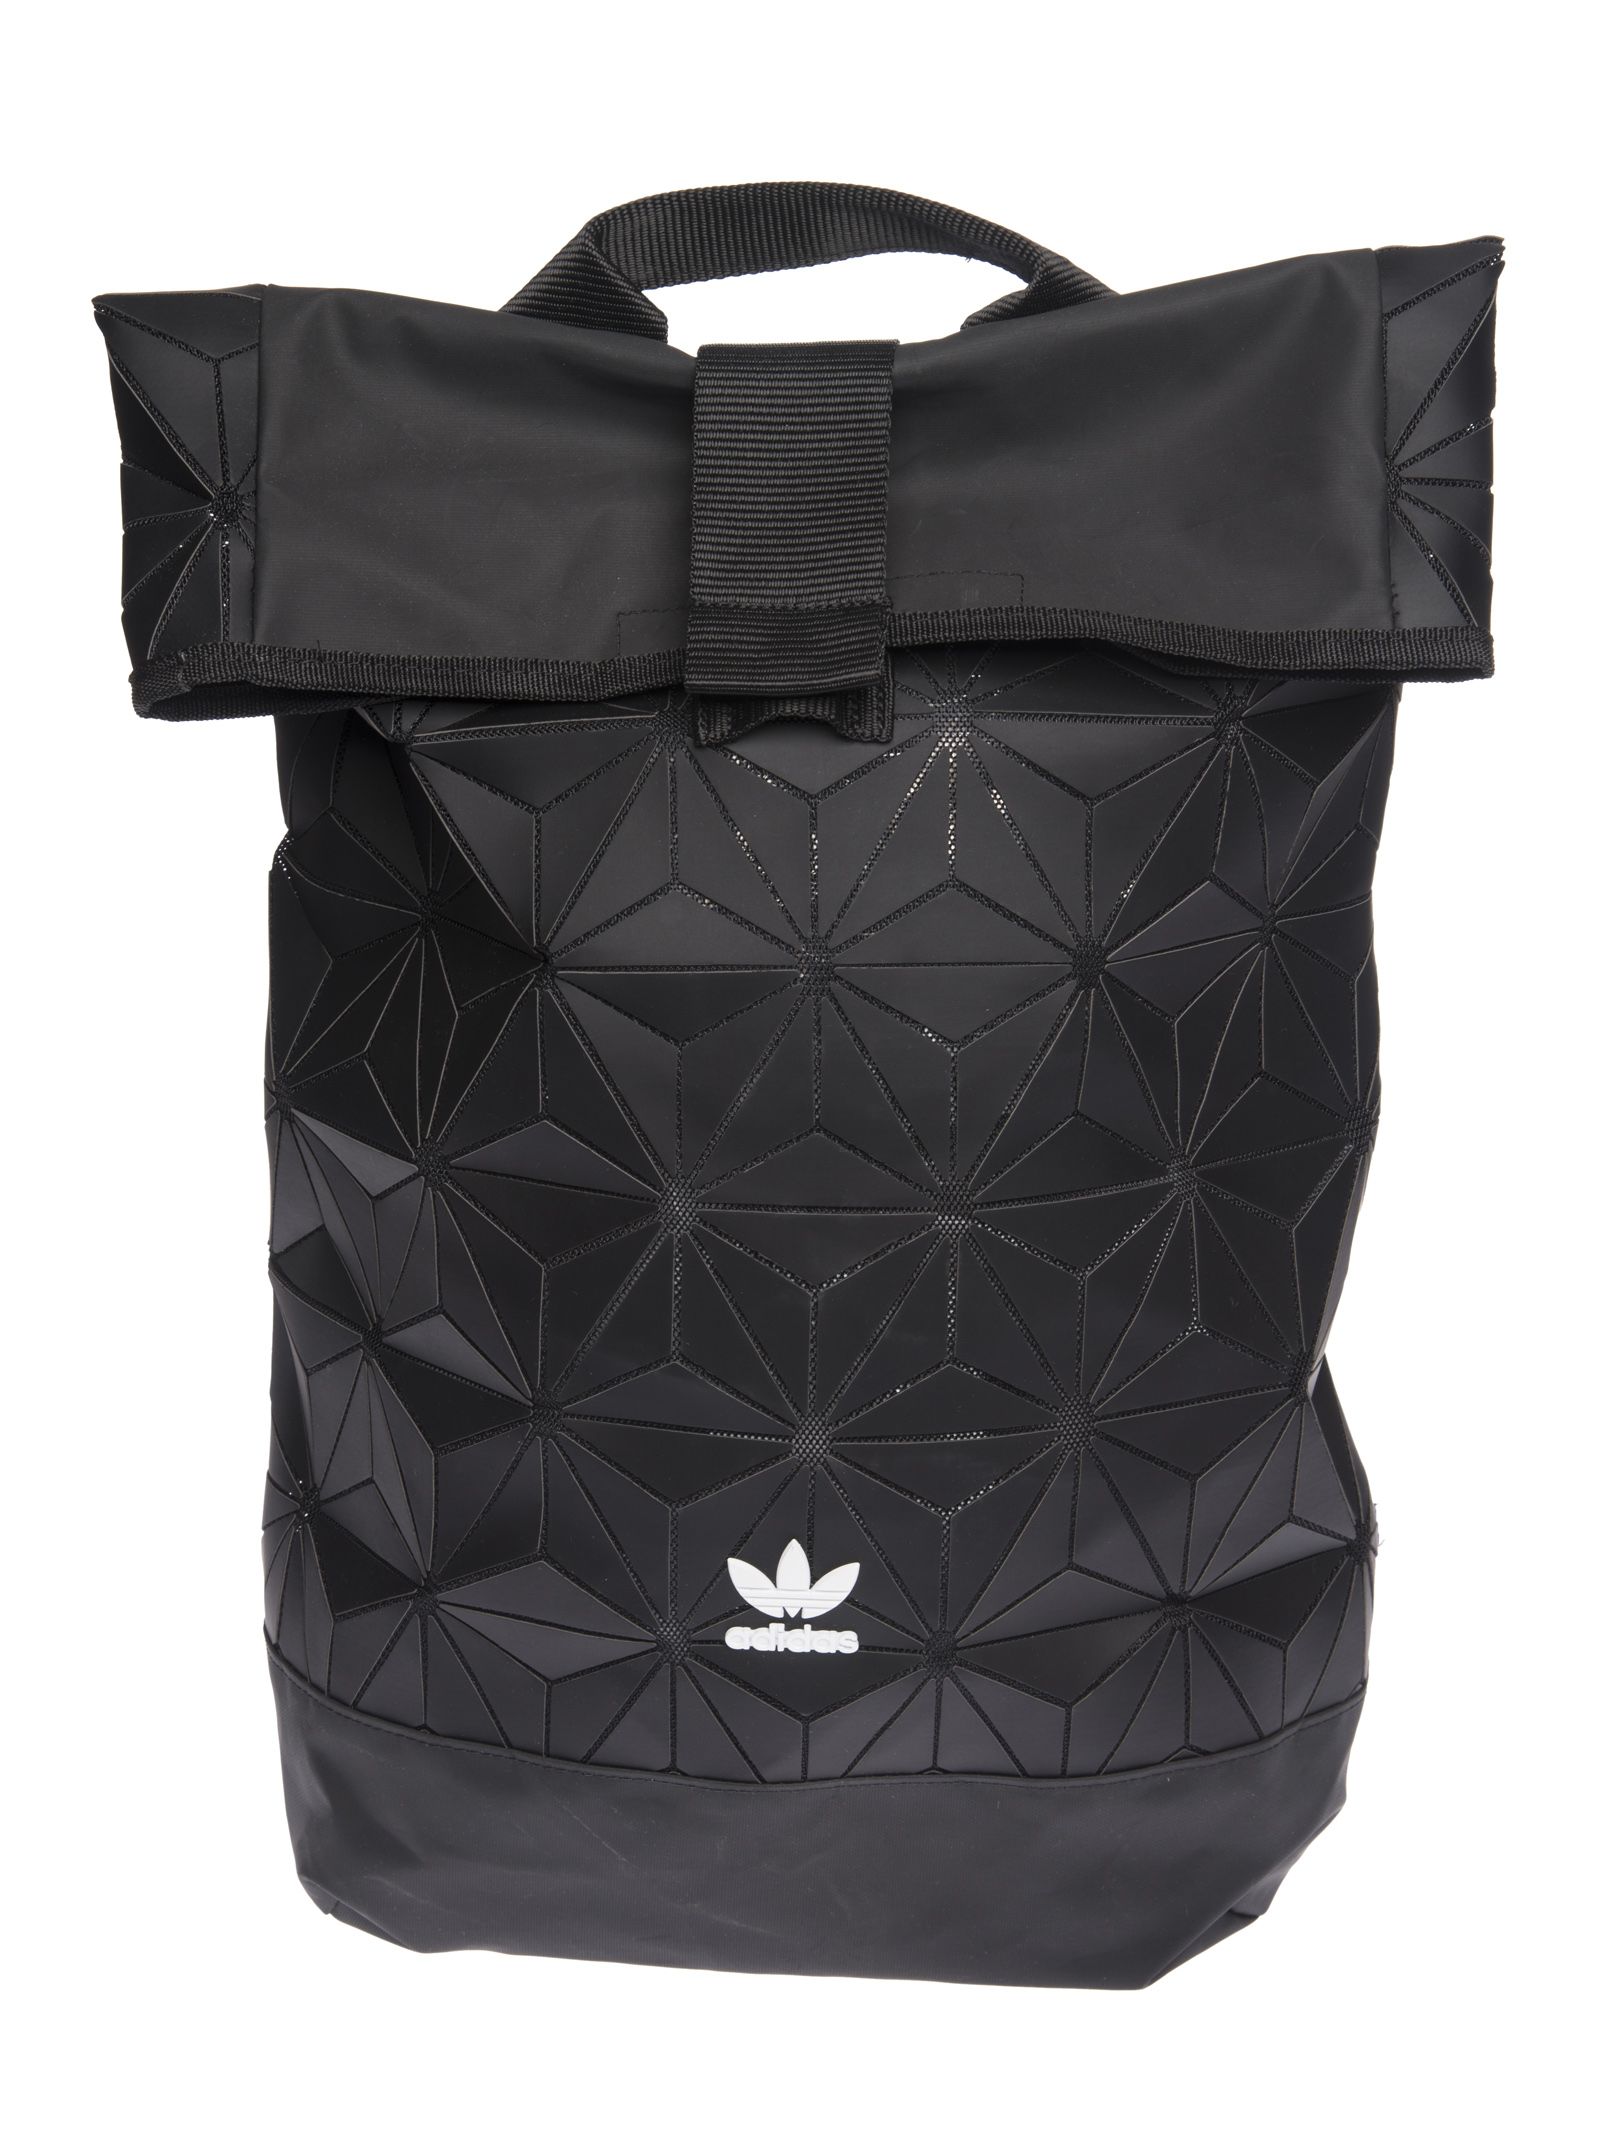 adidas originals backpack black